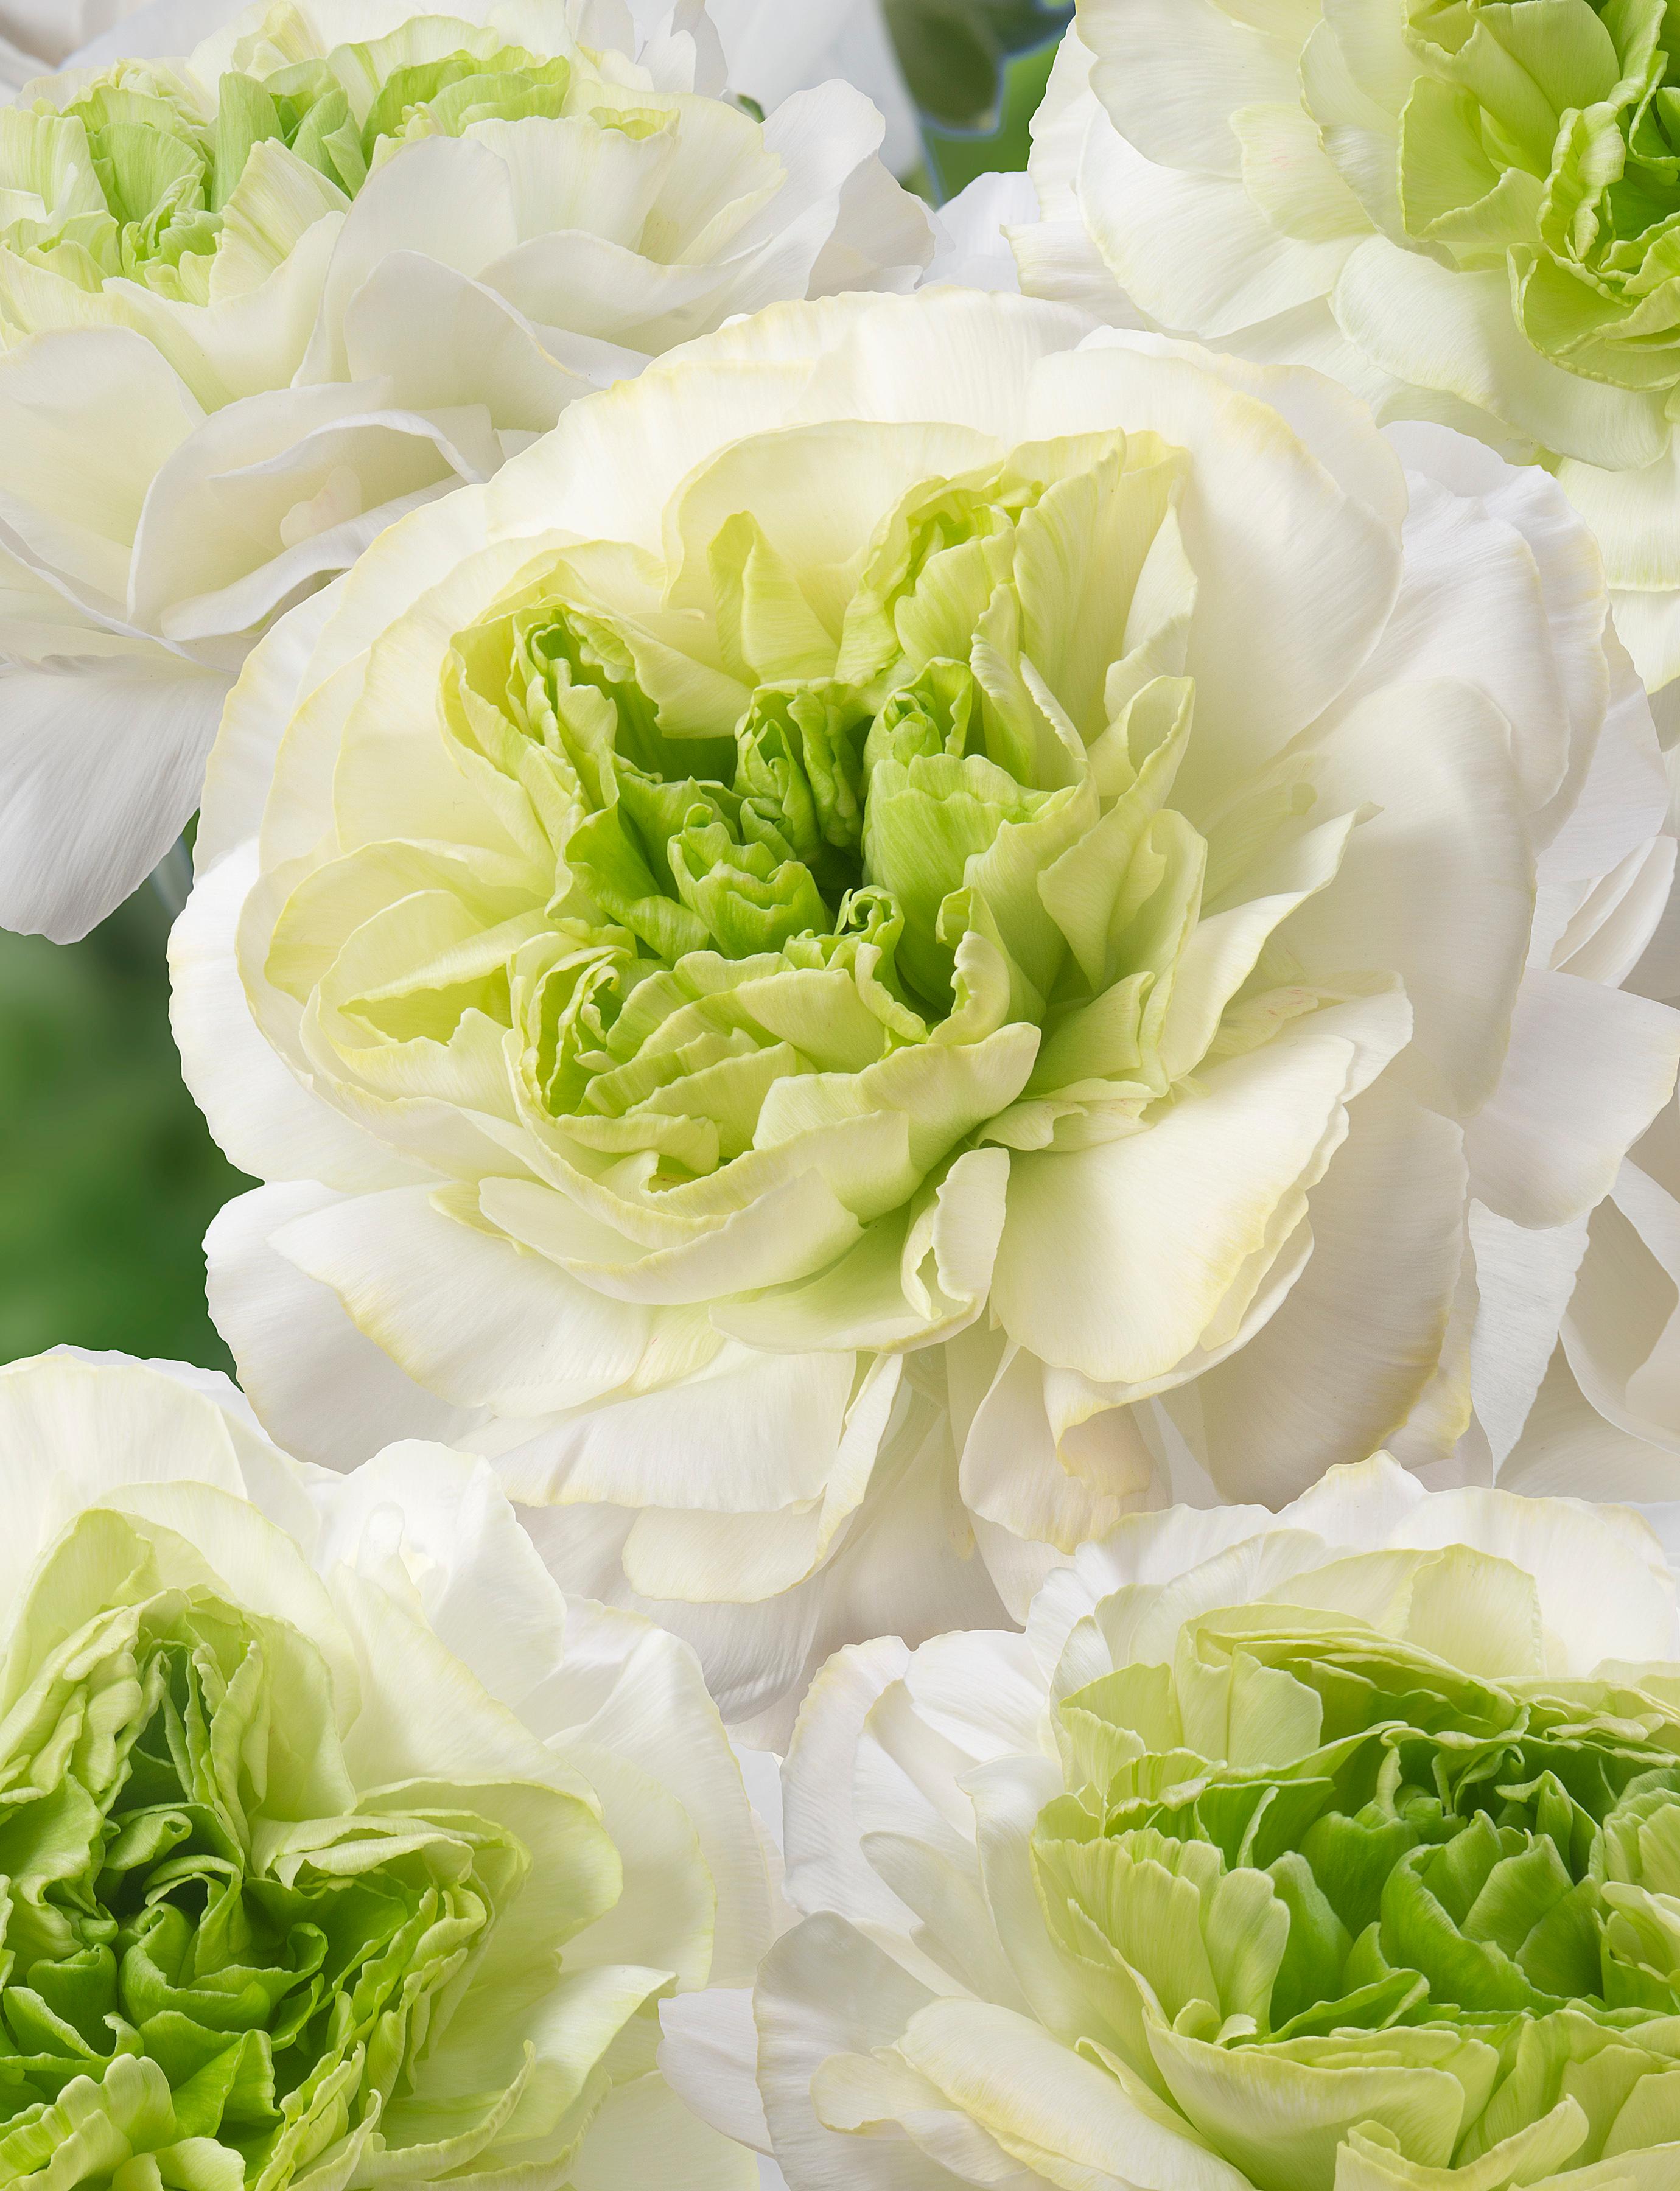 Ranunculus Romance 'Cerbere' - from Leo Berbee Bulb Company